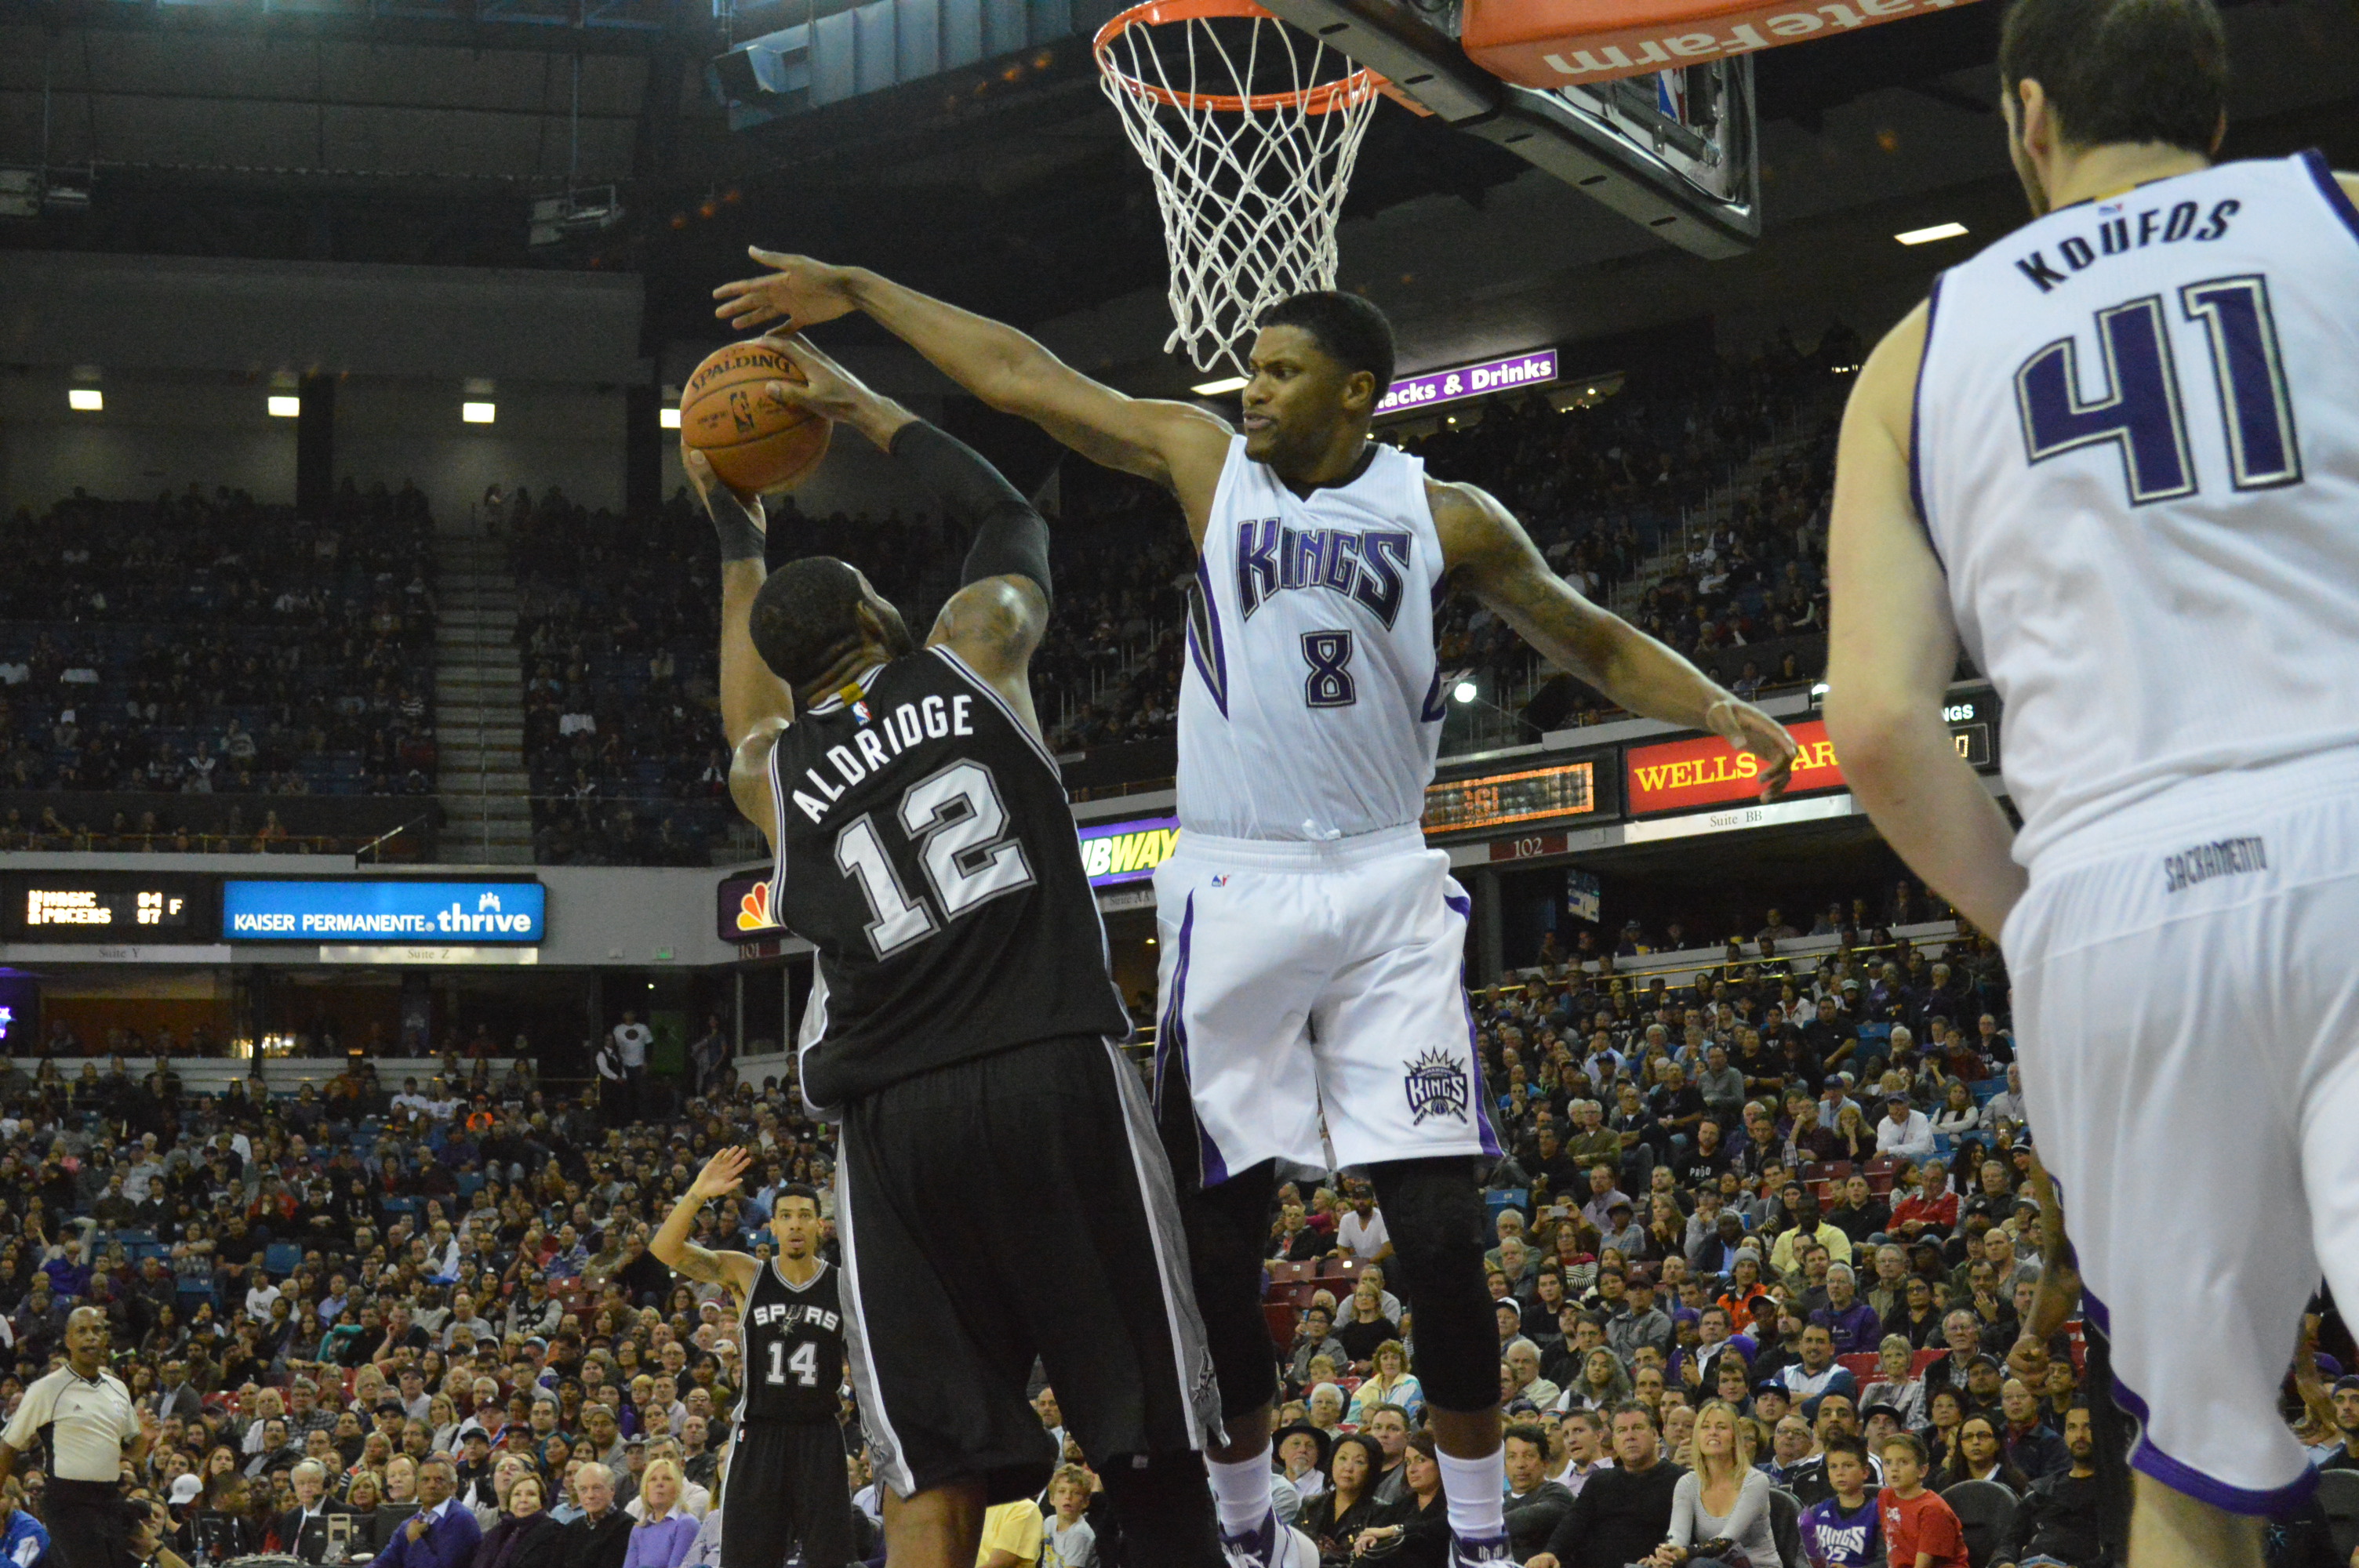 Kings lose 10688 to Spurs, Continue Losing Streak The Sacramento